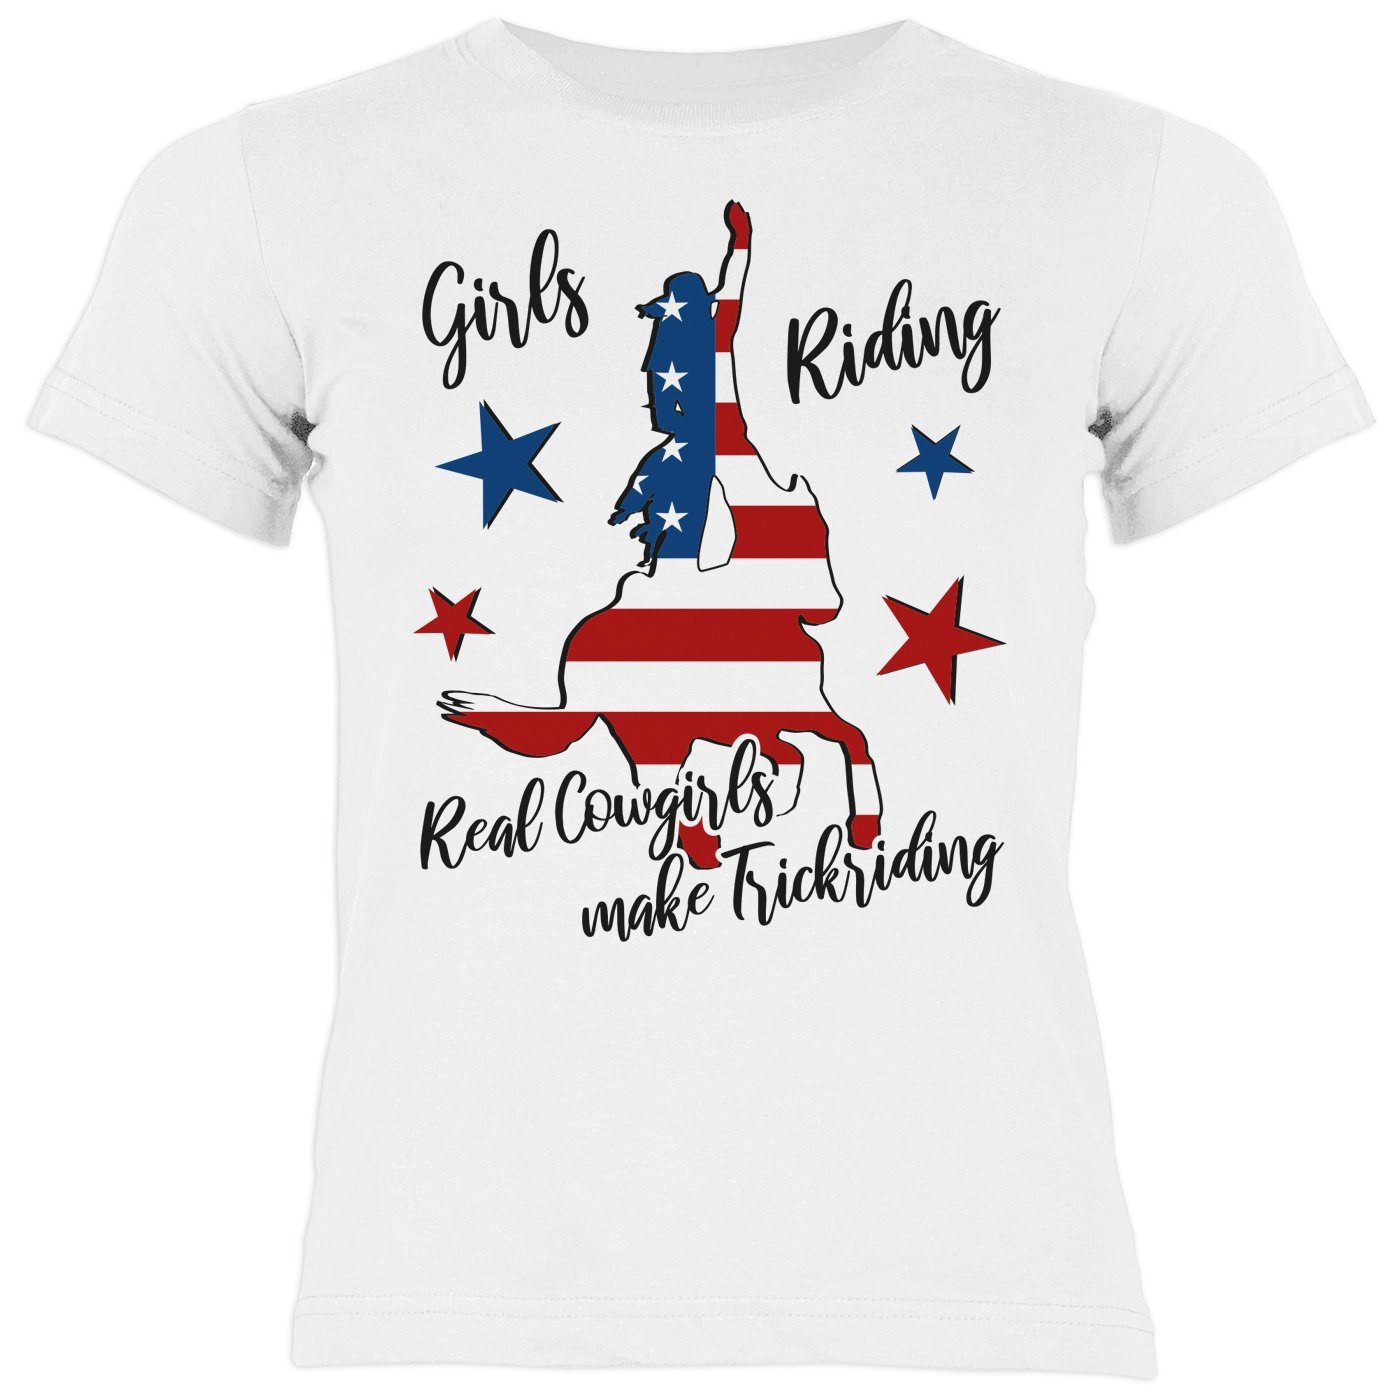 Tini - Shirts Trickriding Trickriding Real Cowgirls T-Shirt make Trickreiter Riding : Cowgirl Trickreiter Kindershirt Shirt Motiv T-Shirt Kinder Girls